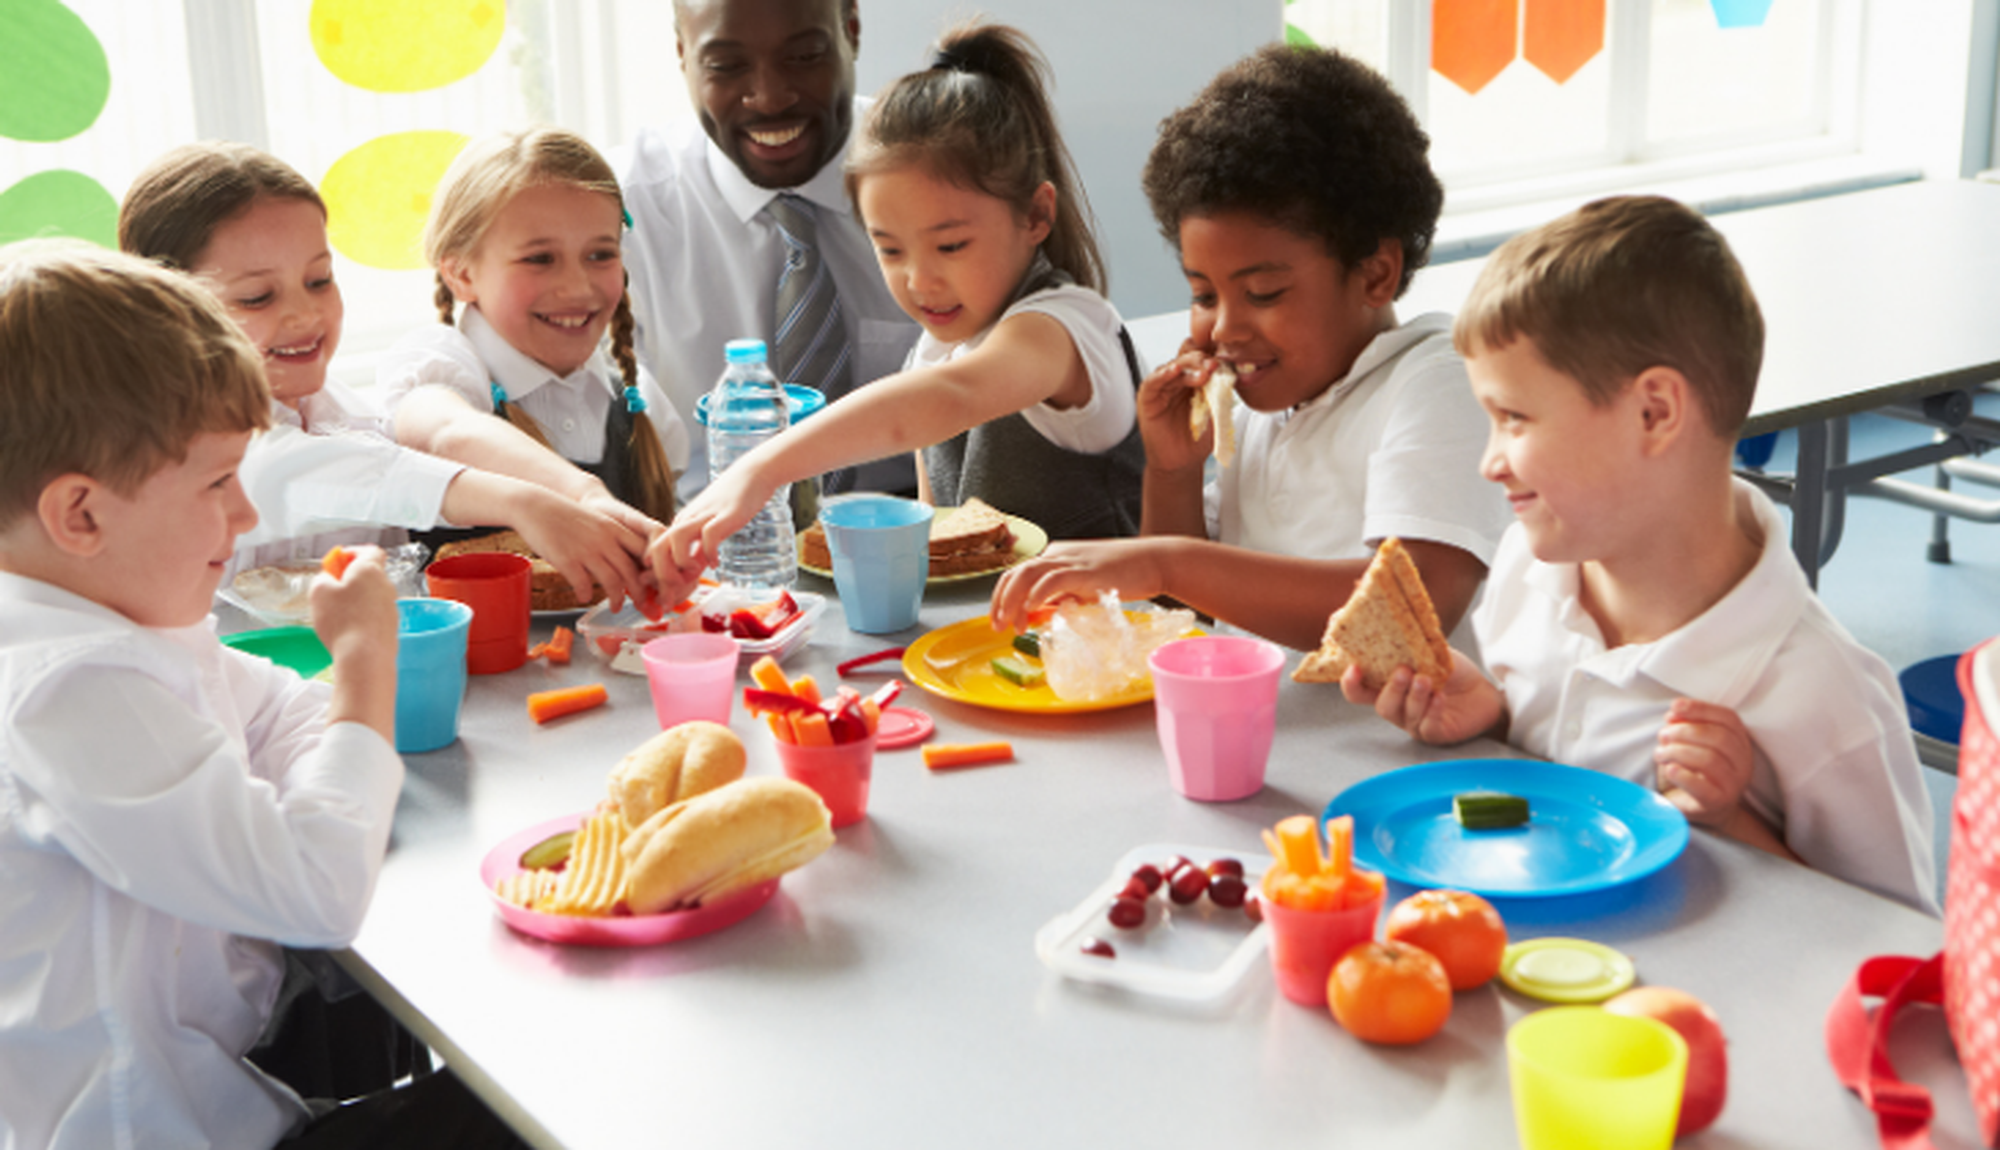 Magenta Security support 1,200 meals for children